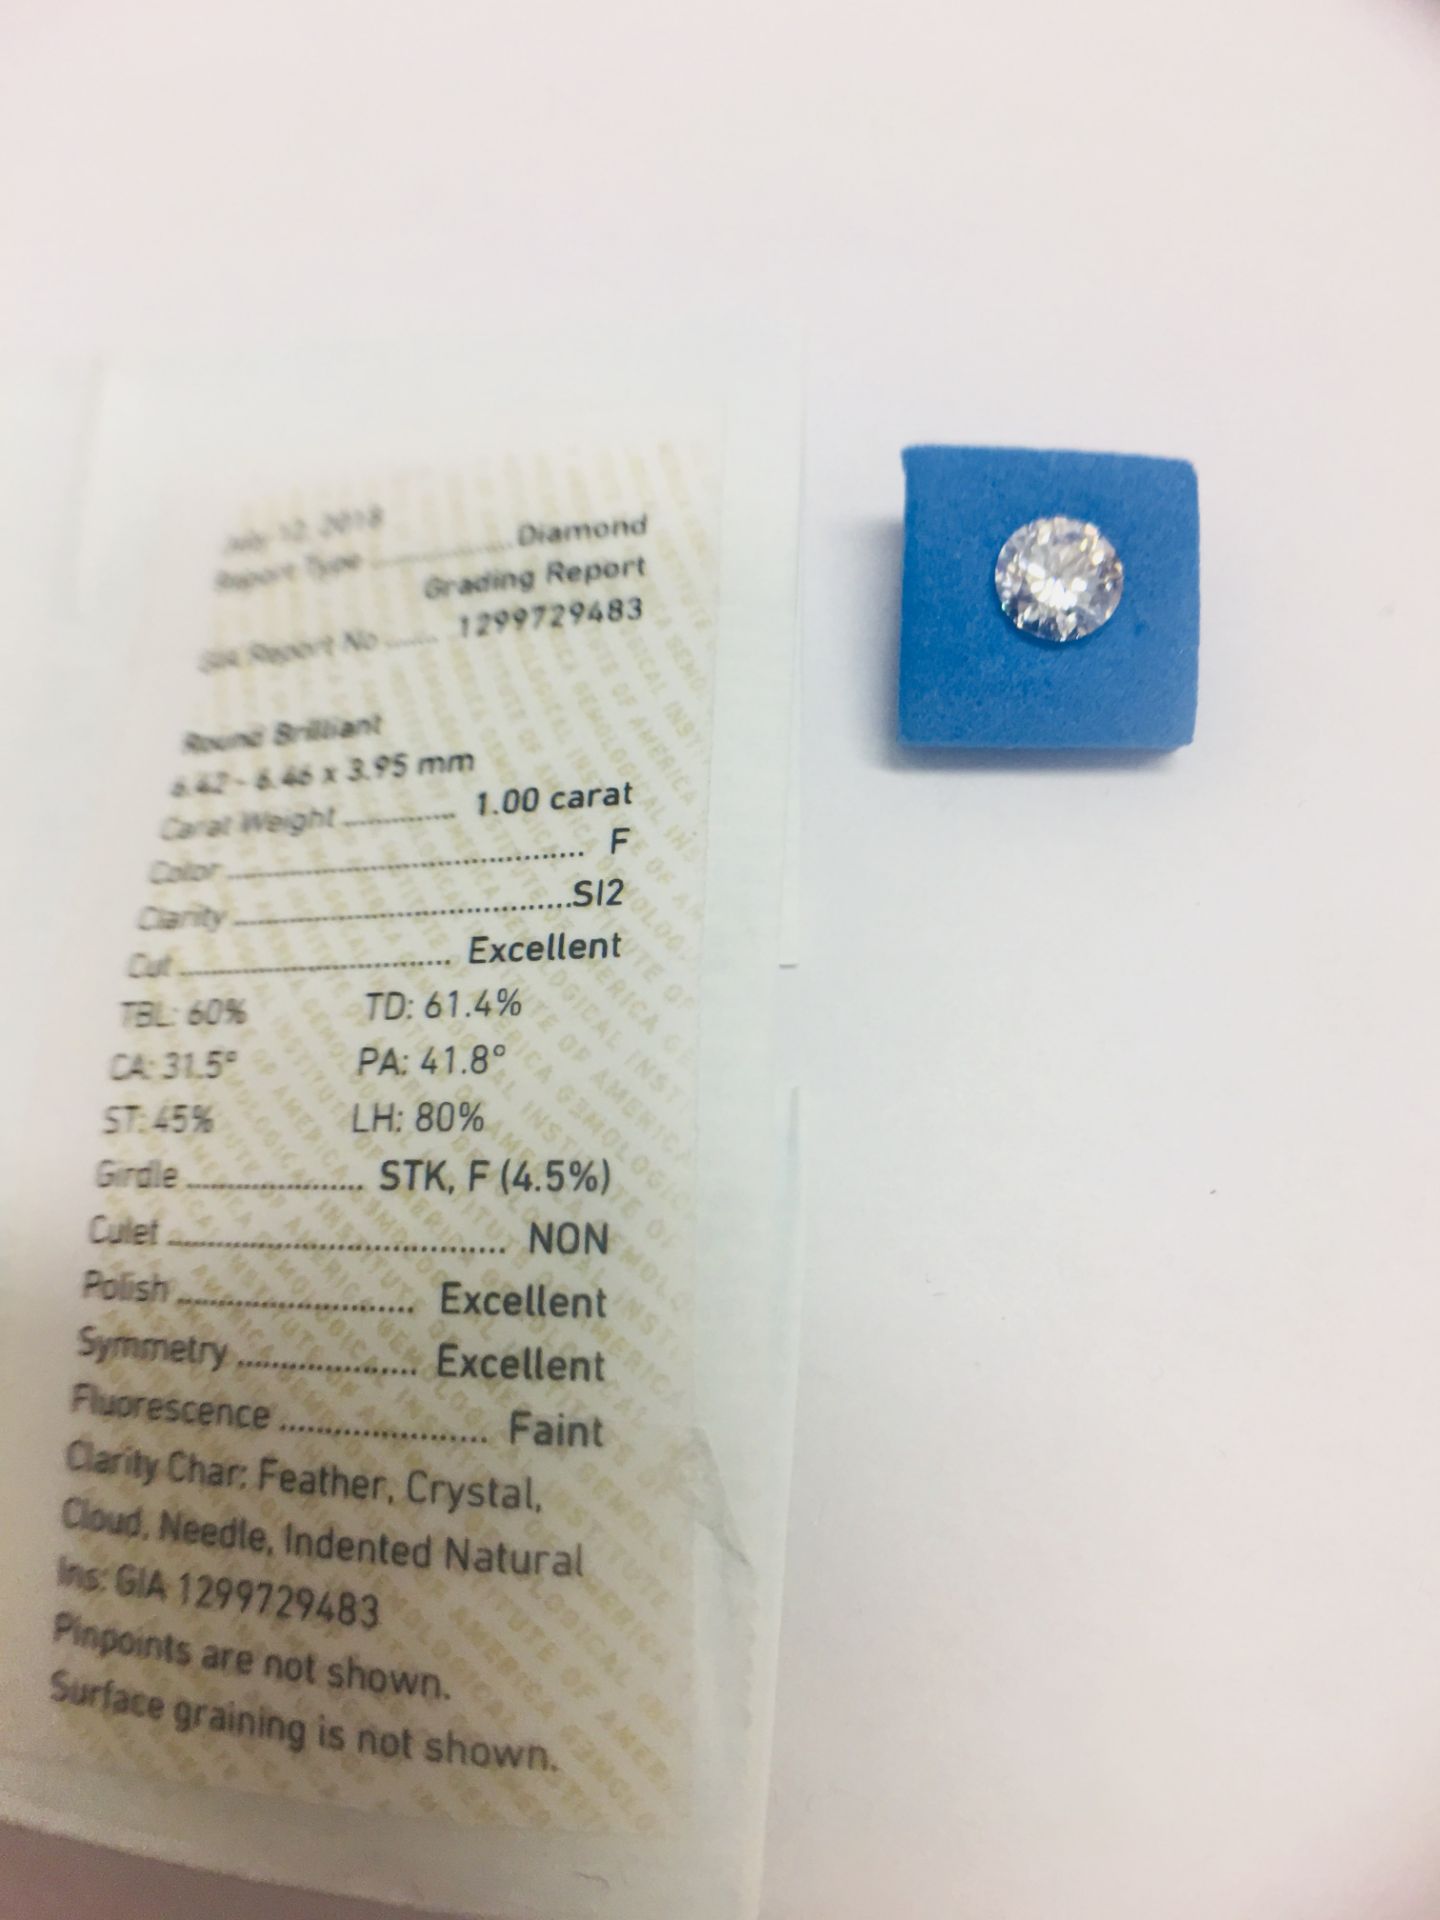 1ct Brilliant cut diamond,F colour,SI2 clarity,GIA certification - Image 2 of 2